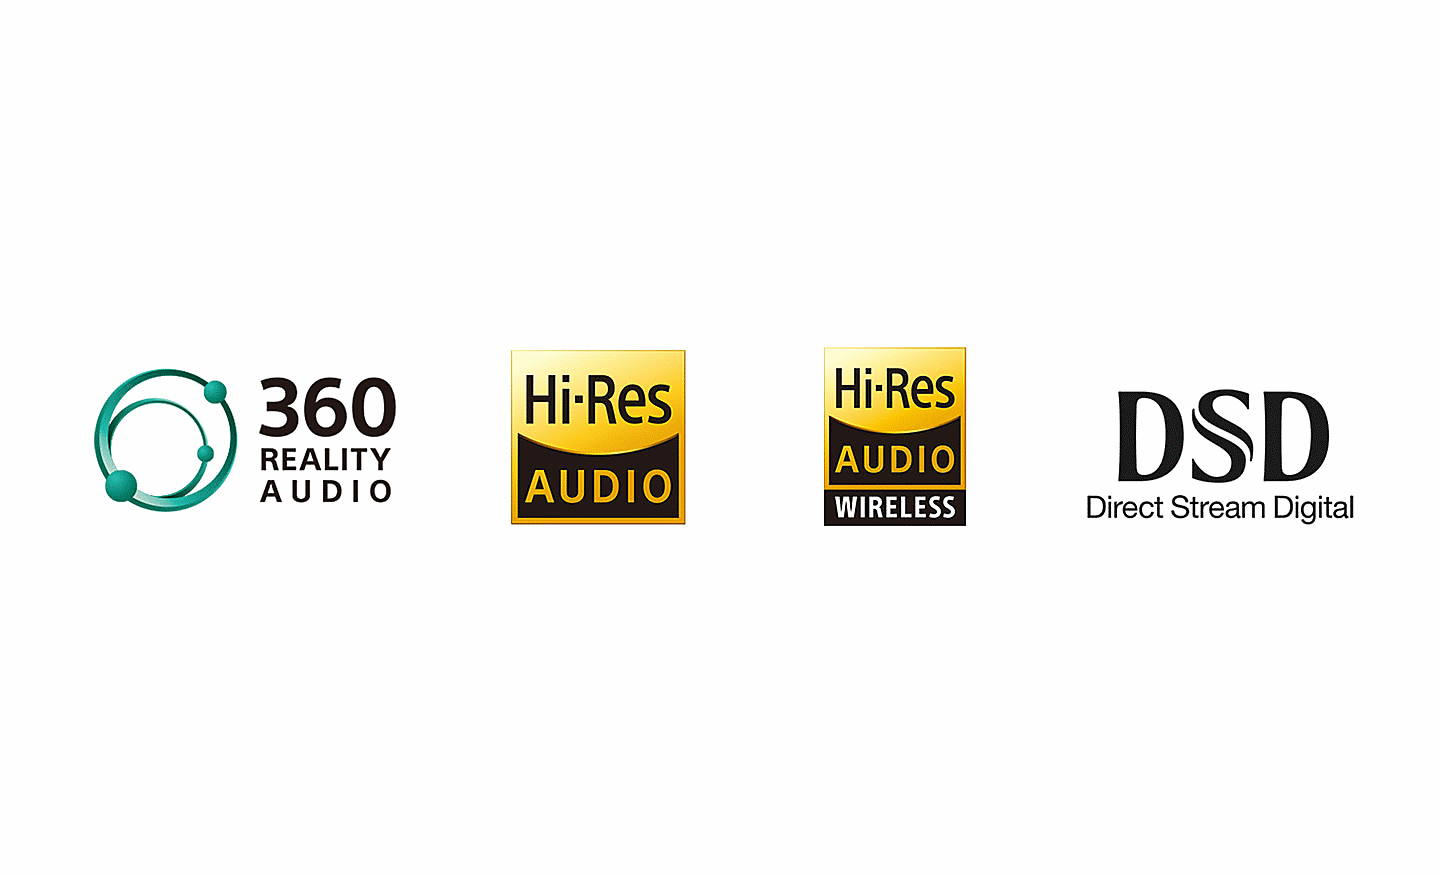 Logo 360 Reality Audio, logo Hi-Res Audio, logo audio Hi-RES Wireless, logo DSD Direct Stream Digital